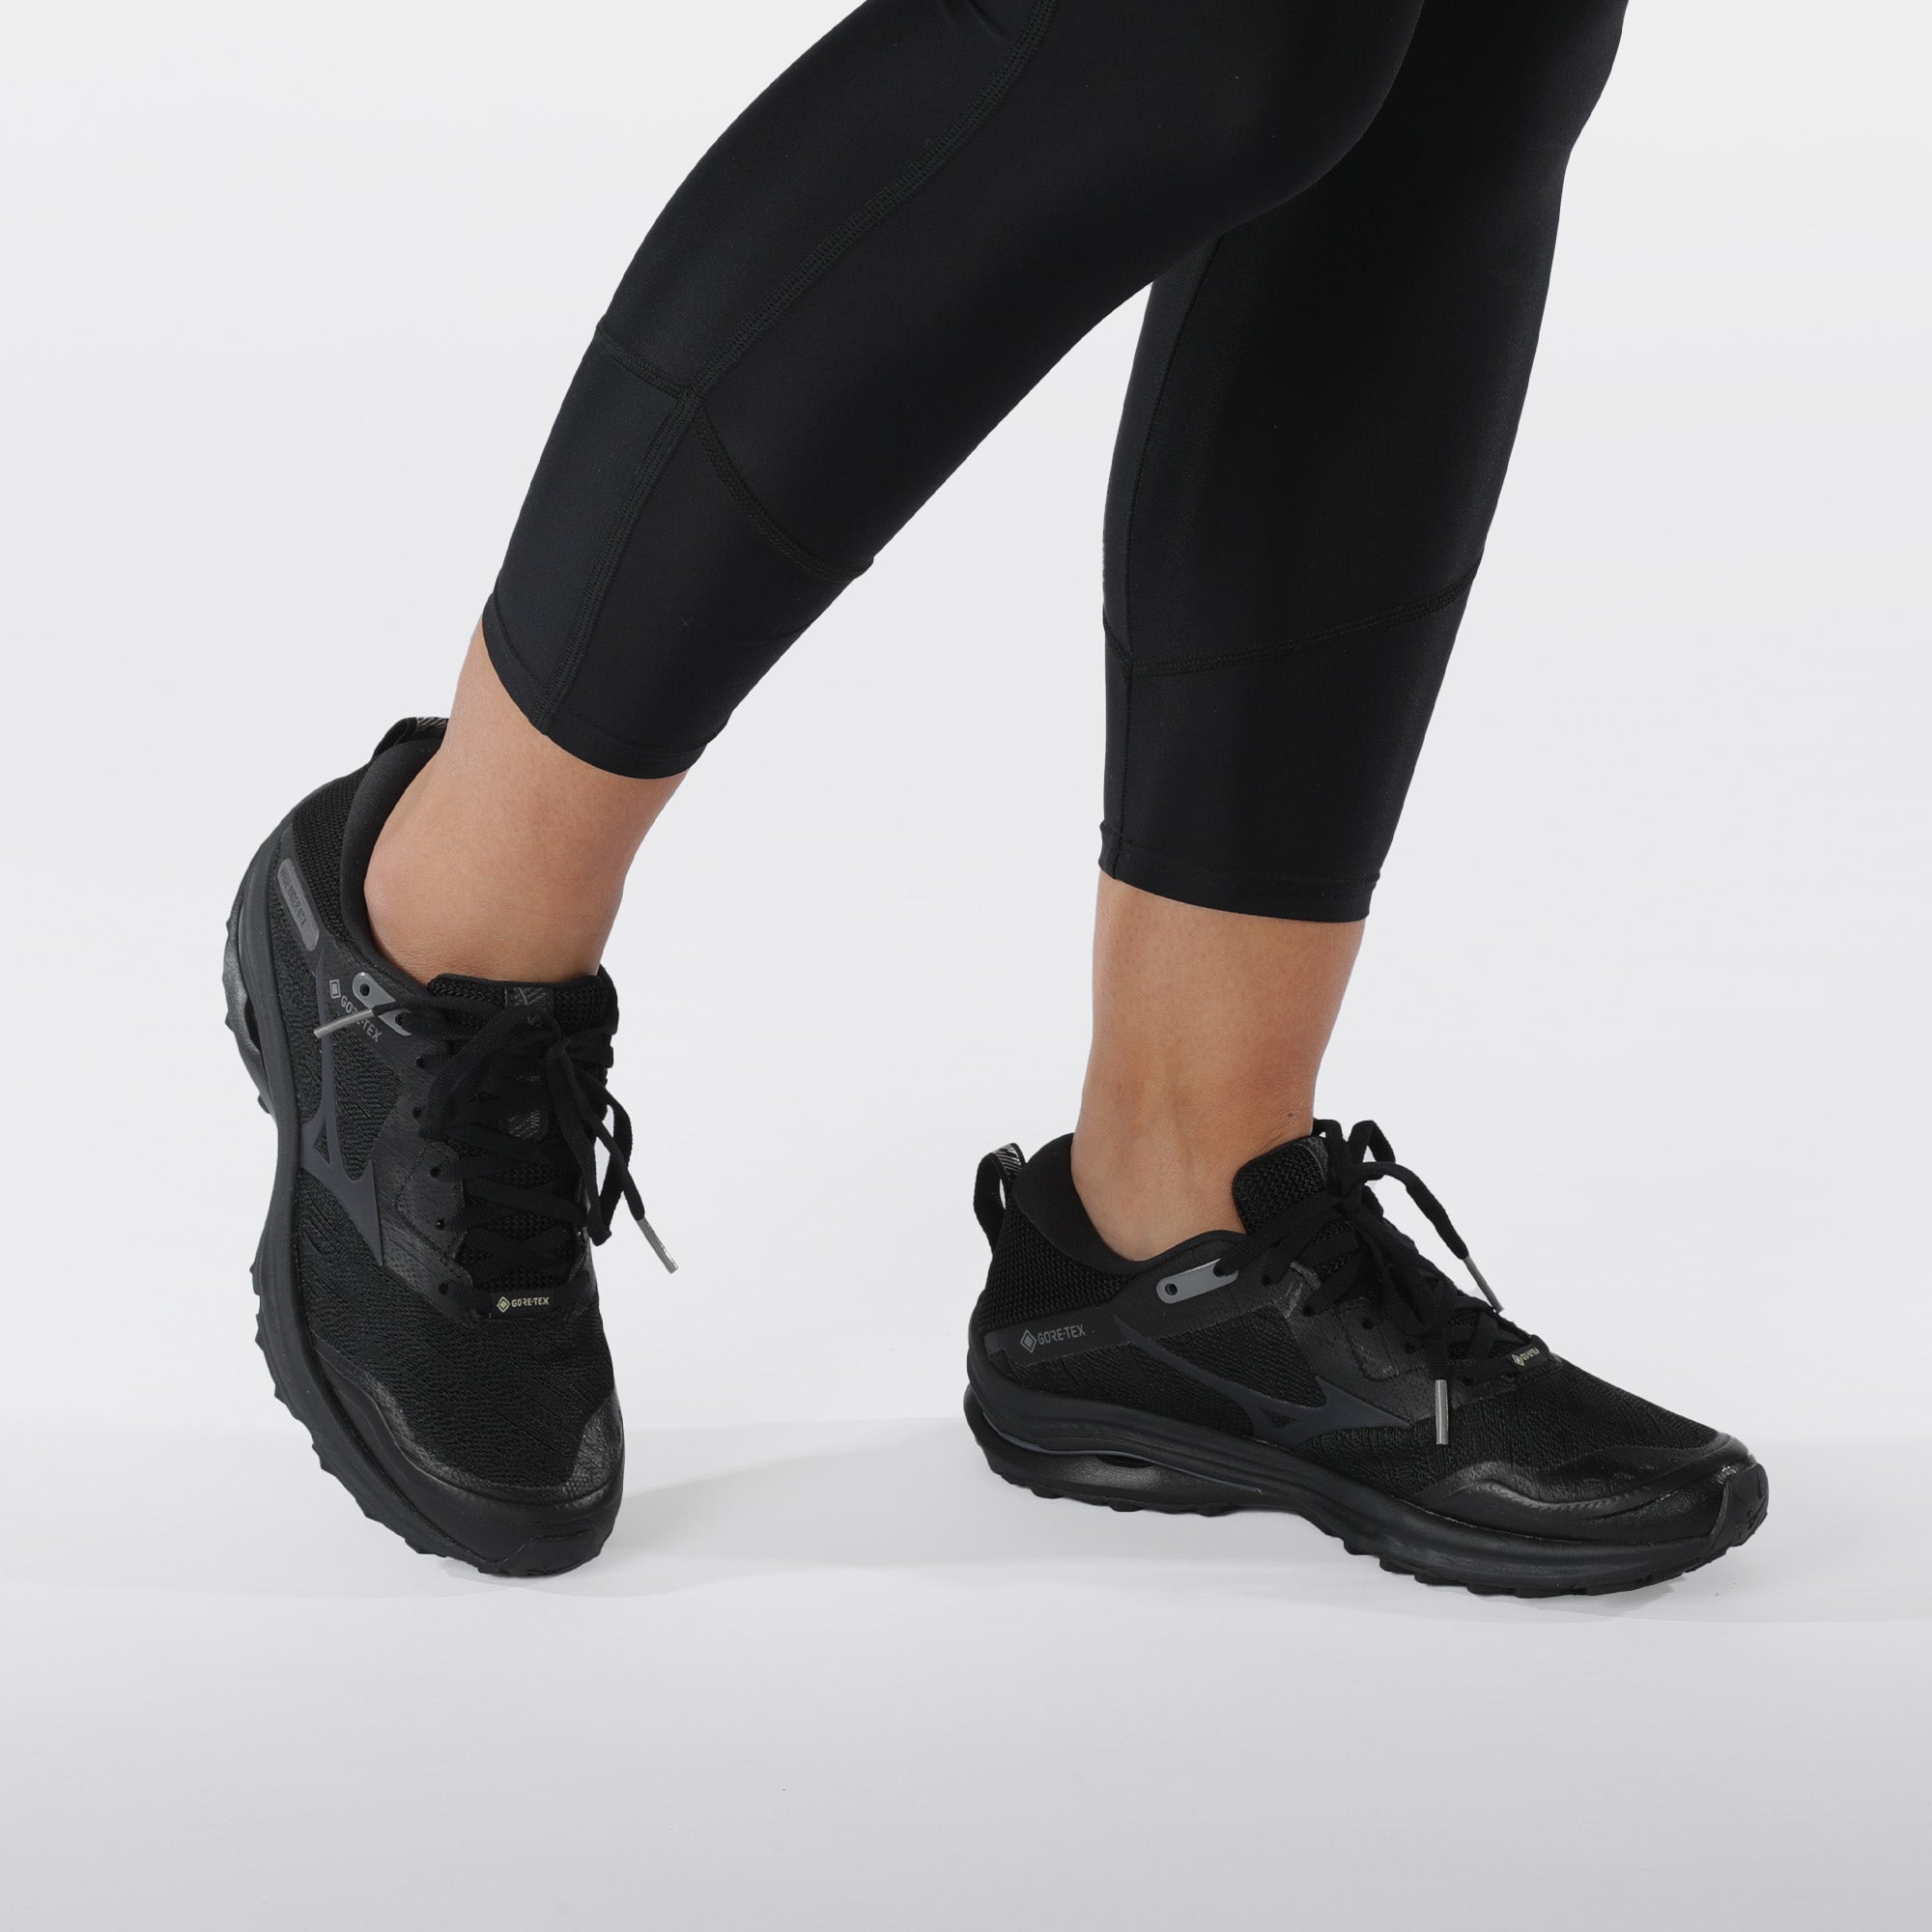 Mizuno Women's Wave Inspire 15 Gray Black Running | Women, Fashion, Black